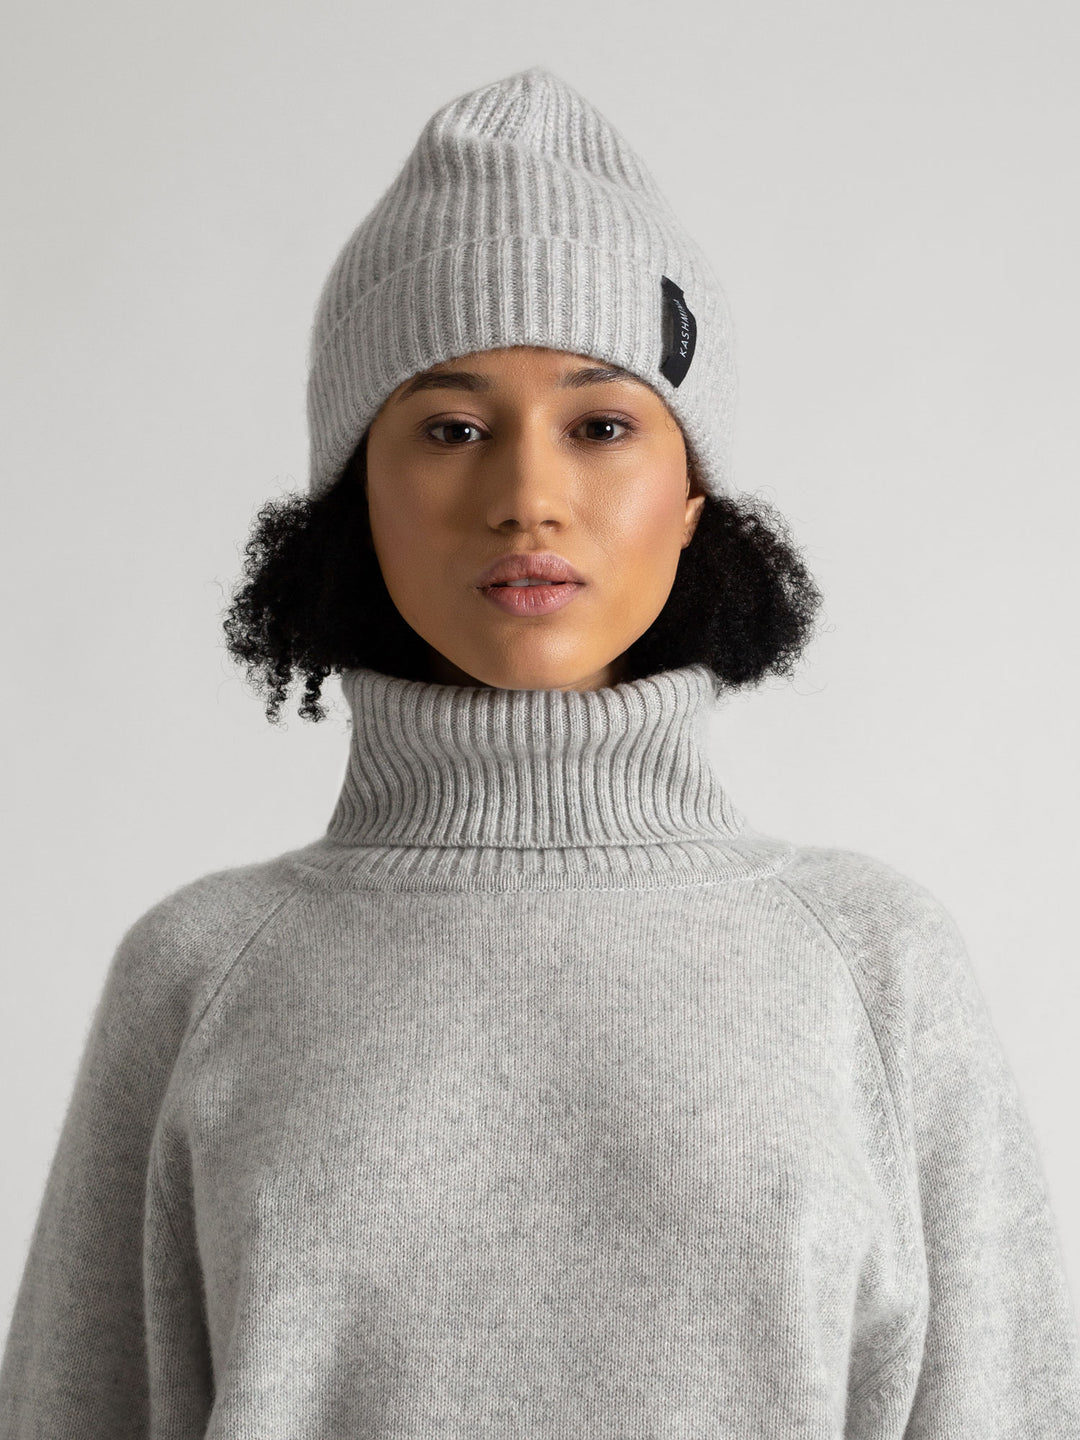 Cashmere cap "Elli", 100% pure cashmere, light grey, knitted, non itching, soft, beanie, cap, Scandinavian design by Kashmina